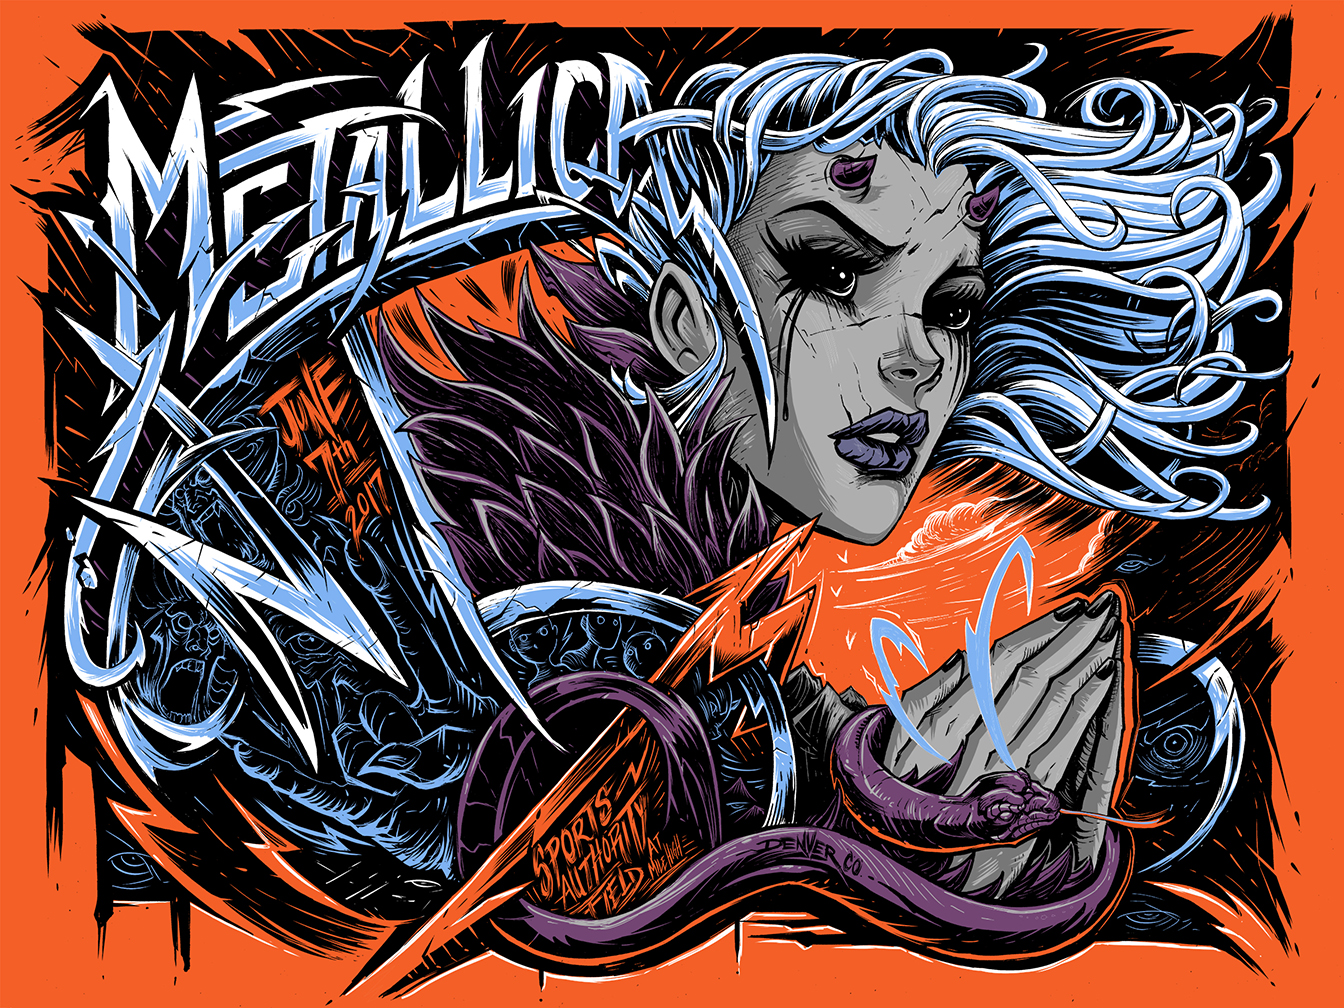 Poster group. Постеры рок групп металика. Металлика арт постеры. Metallica плакат. Постеры группы металлика.